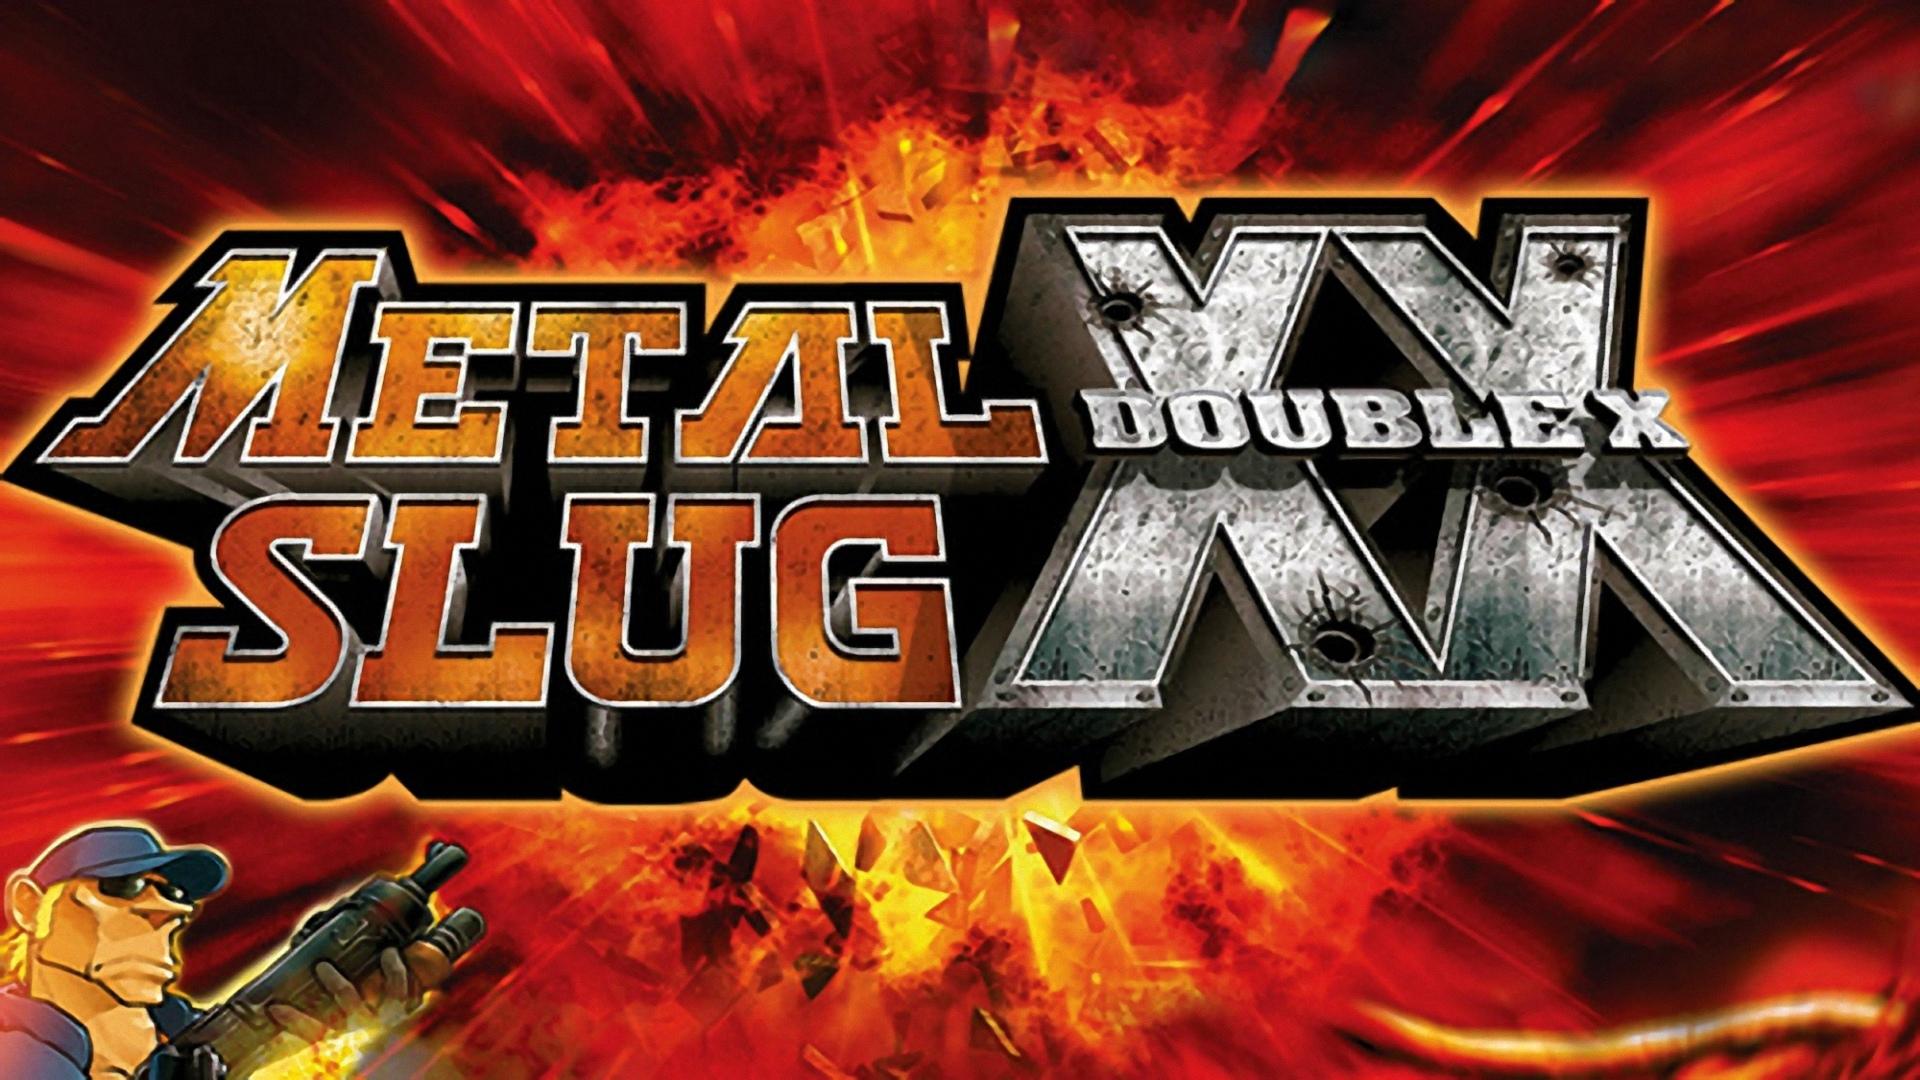 Metal Slug XX at 1024 x 768 size wallpapers HD quality